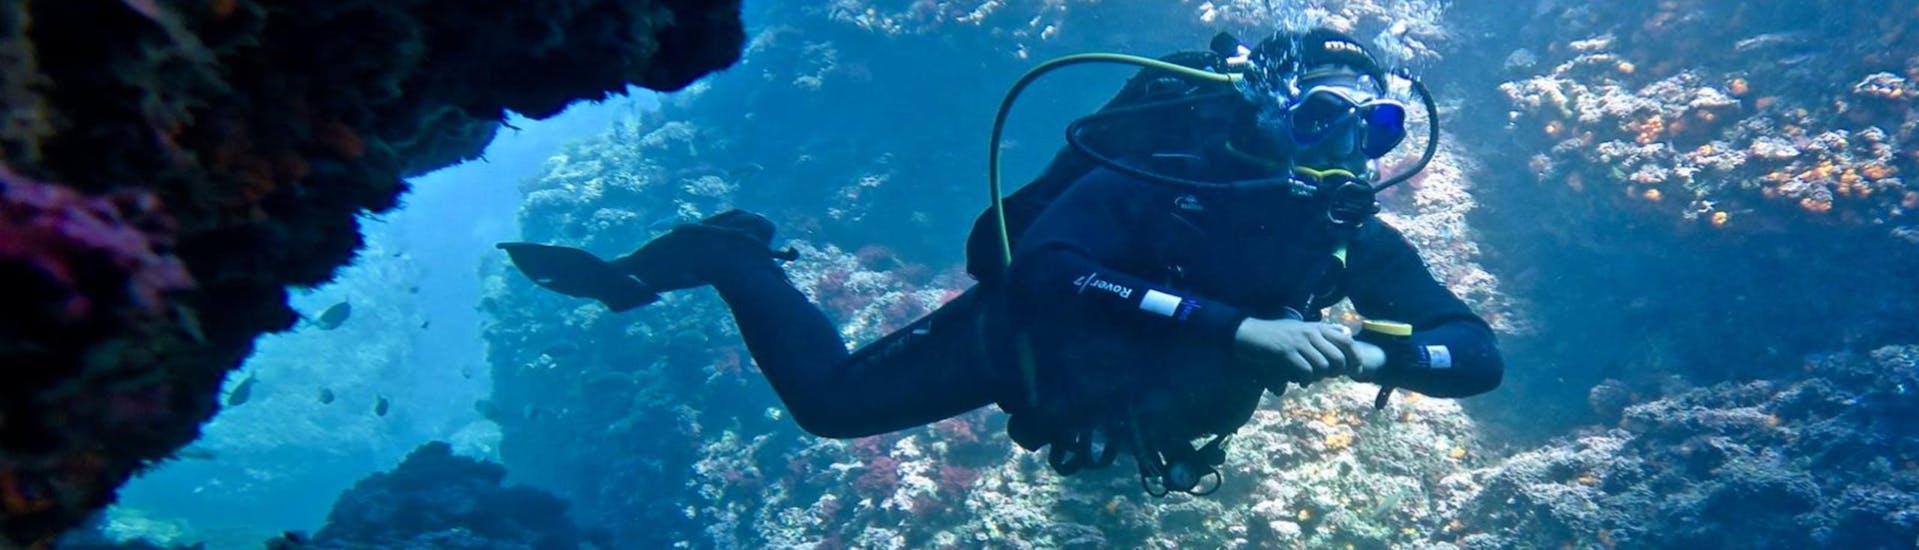 scuba-diving-course-deluxe-advanced-adventure-course-leon-marina-tarifa-hero